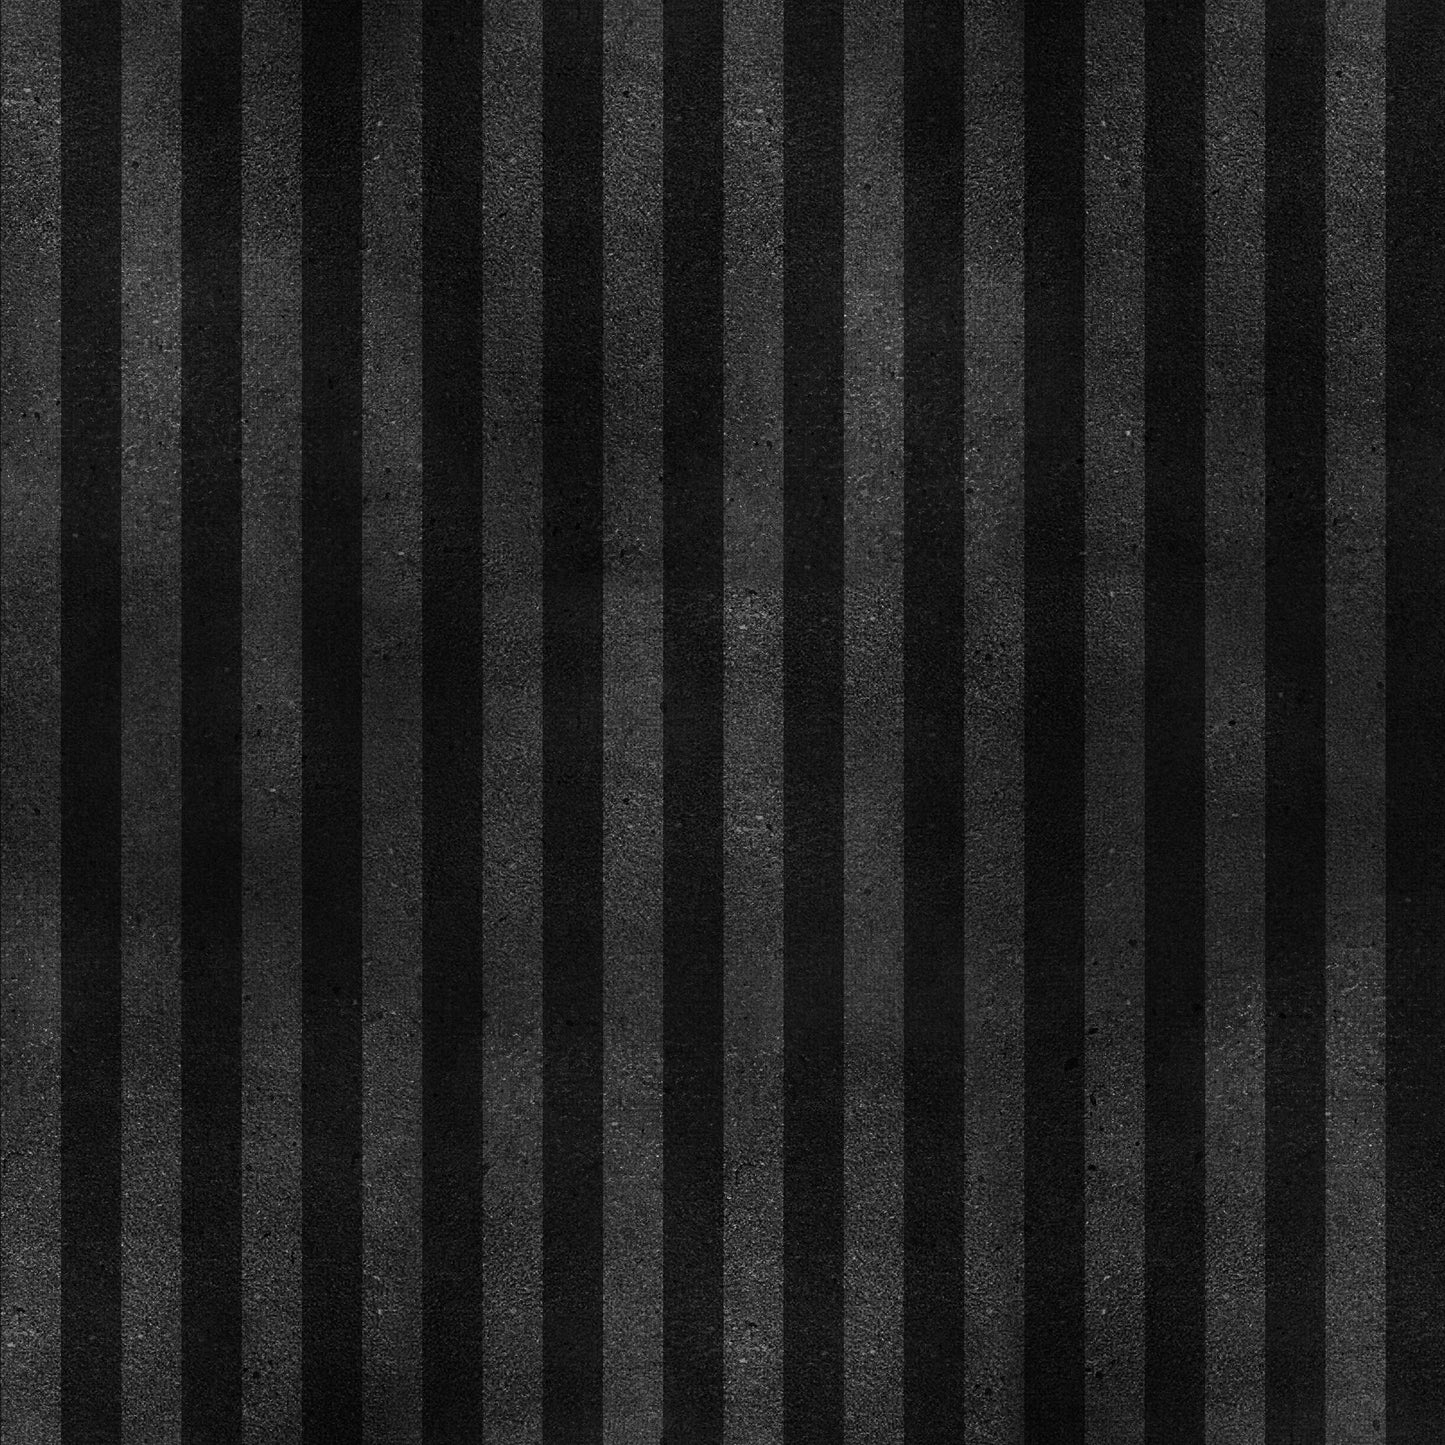 Goth, Black & Grey grunge stripes- 045 Vinyl Sheet